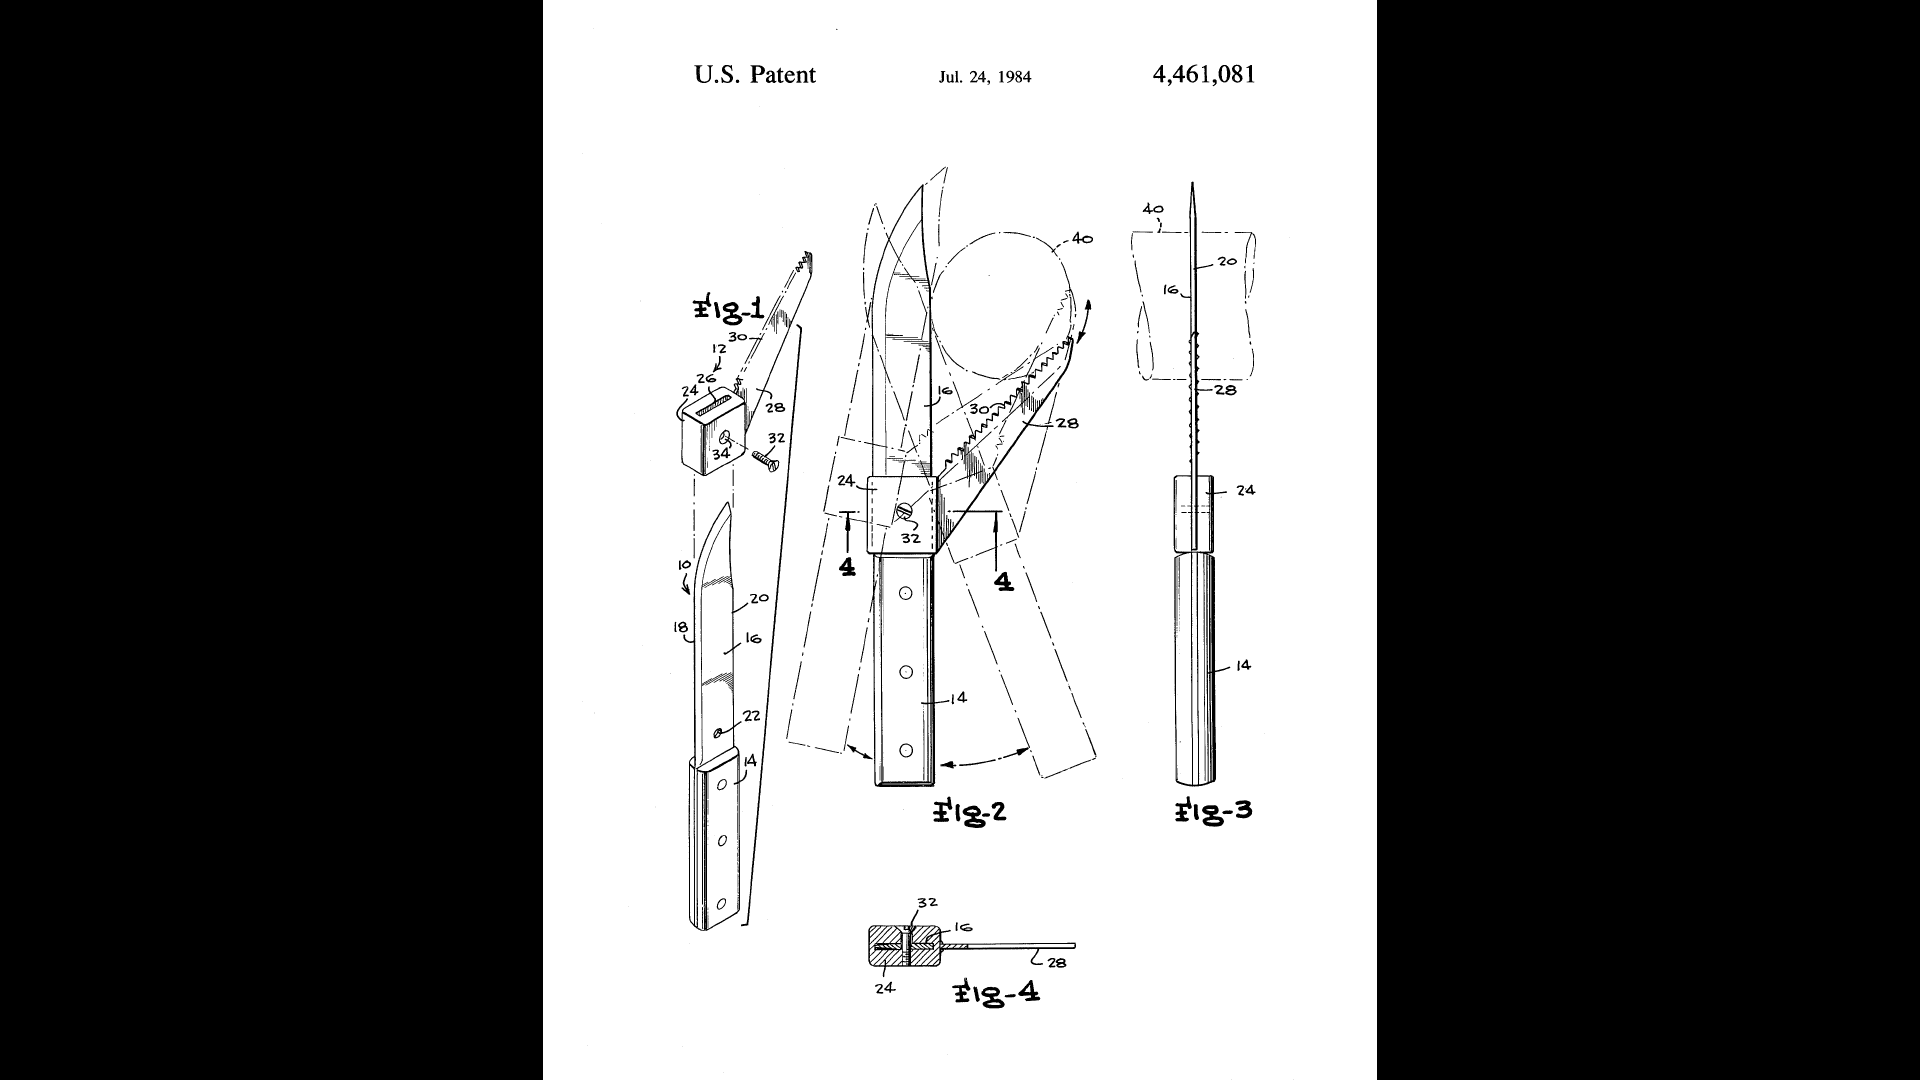 Tom Gaskins Patent No. 4,461,081